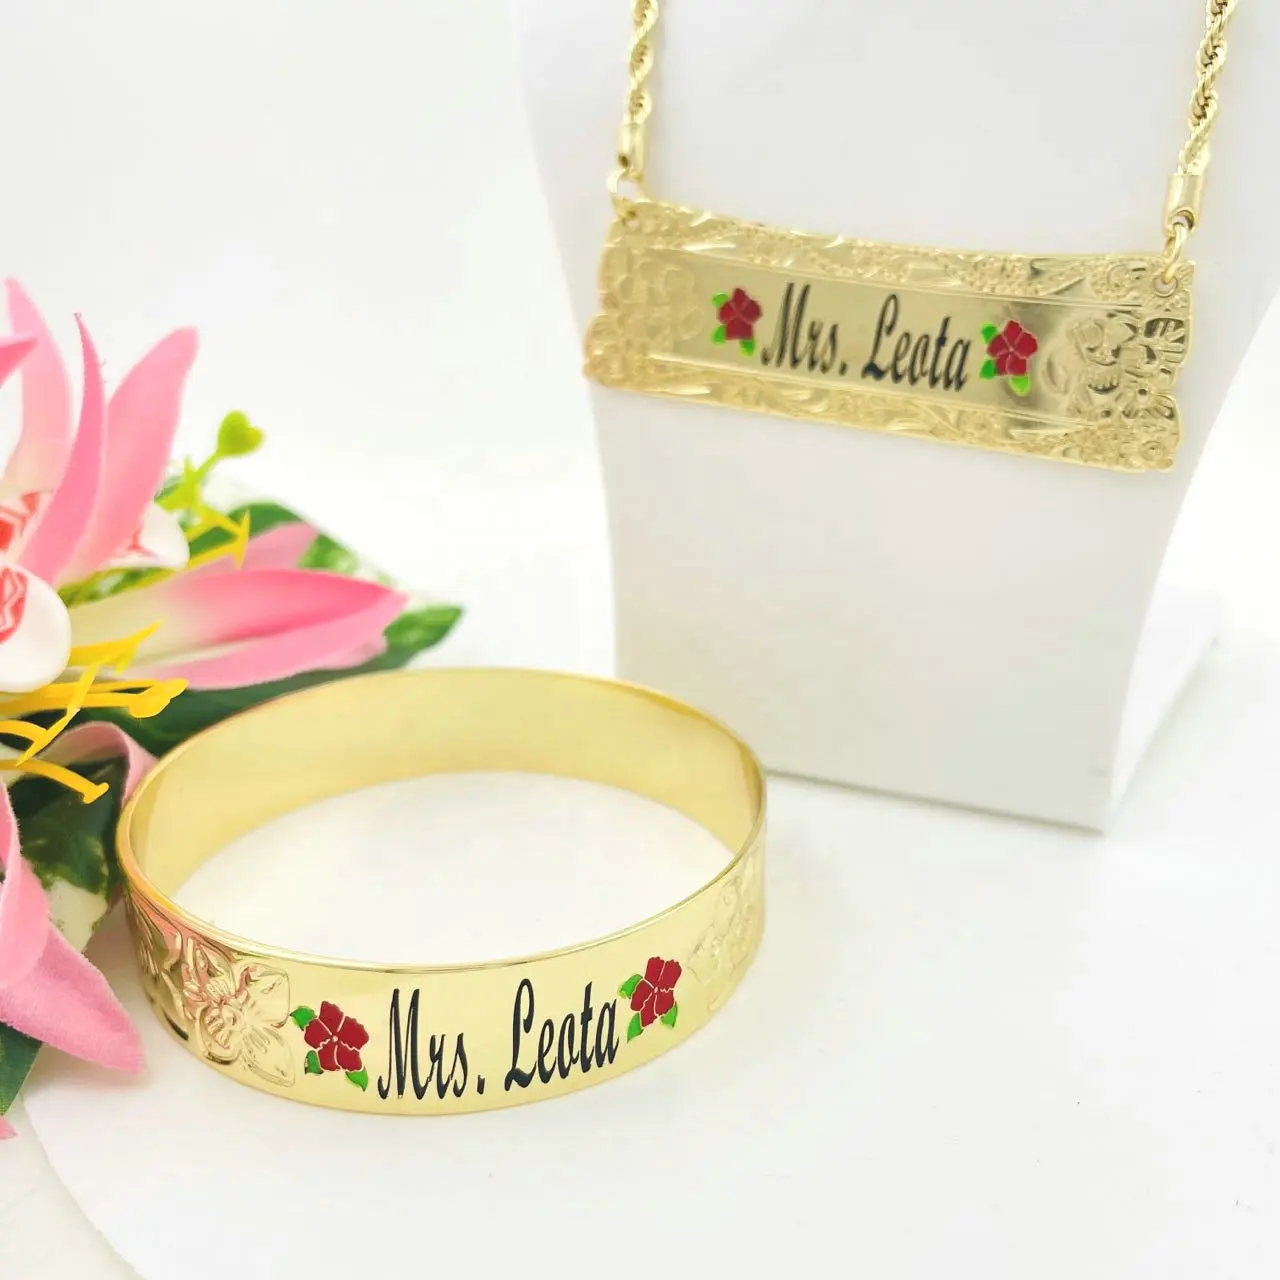 JX216 Customize name jewelry set Personalized enamel flower necklace chain pendant bangle bracelet Anniversary birthday kid gift